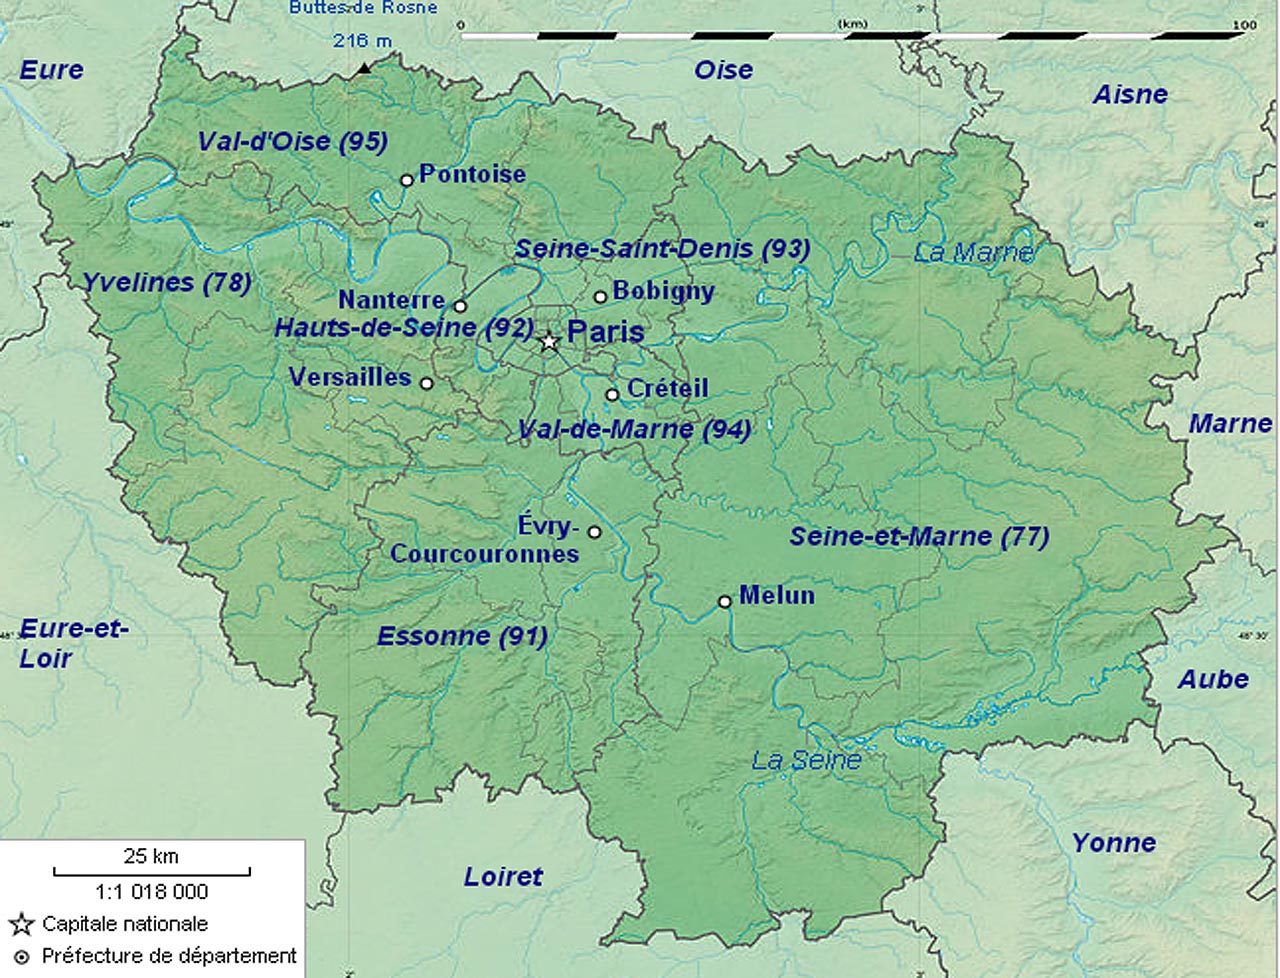 Департаменты региона Иль-де-Франс (Île-de-France) на карте